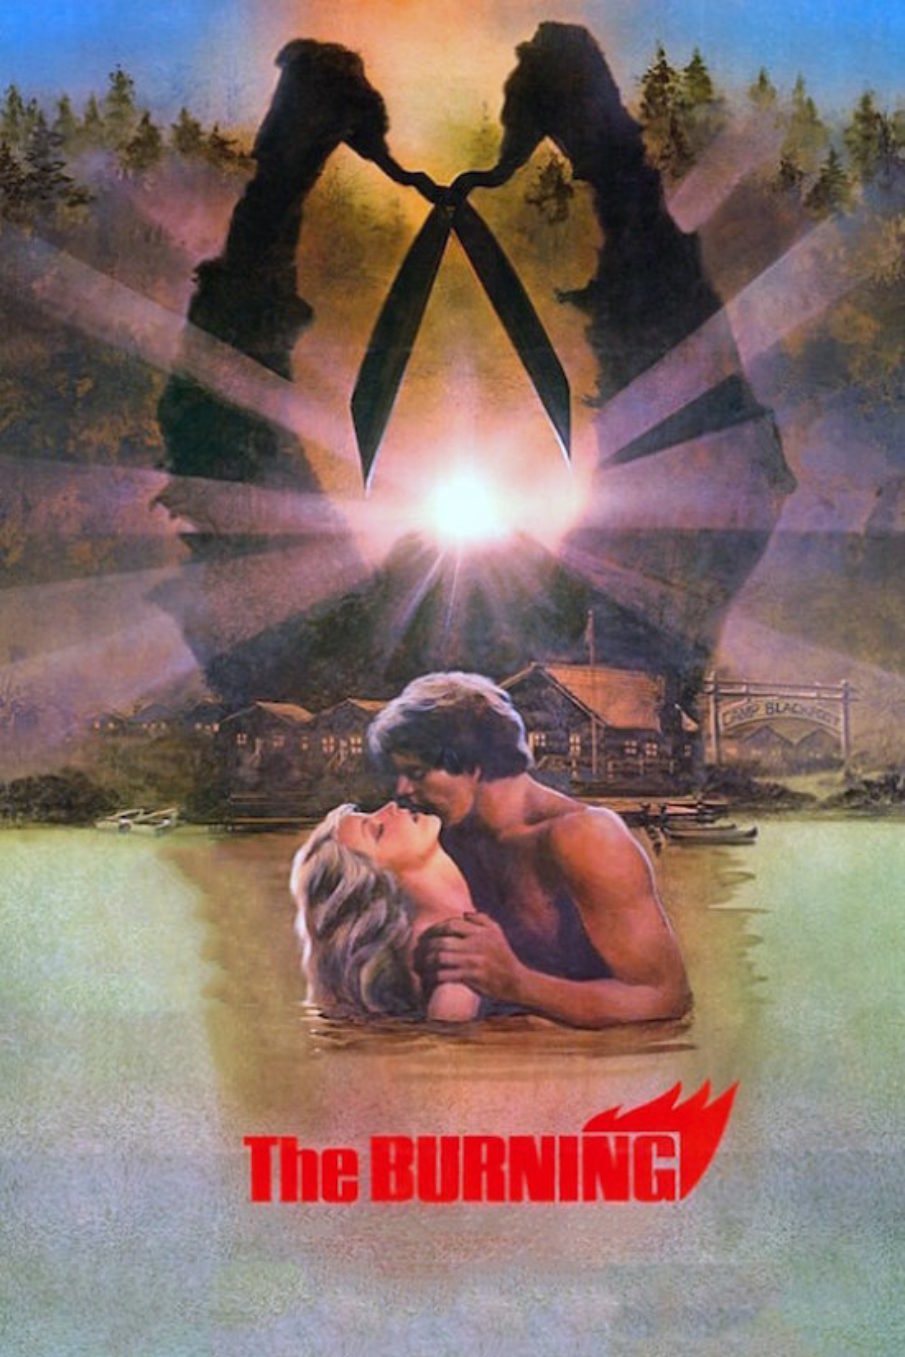 The Burning (1981) – 31 Days of Halloween